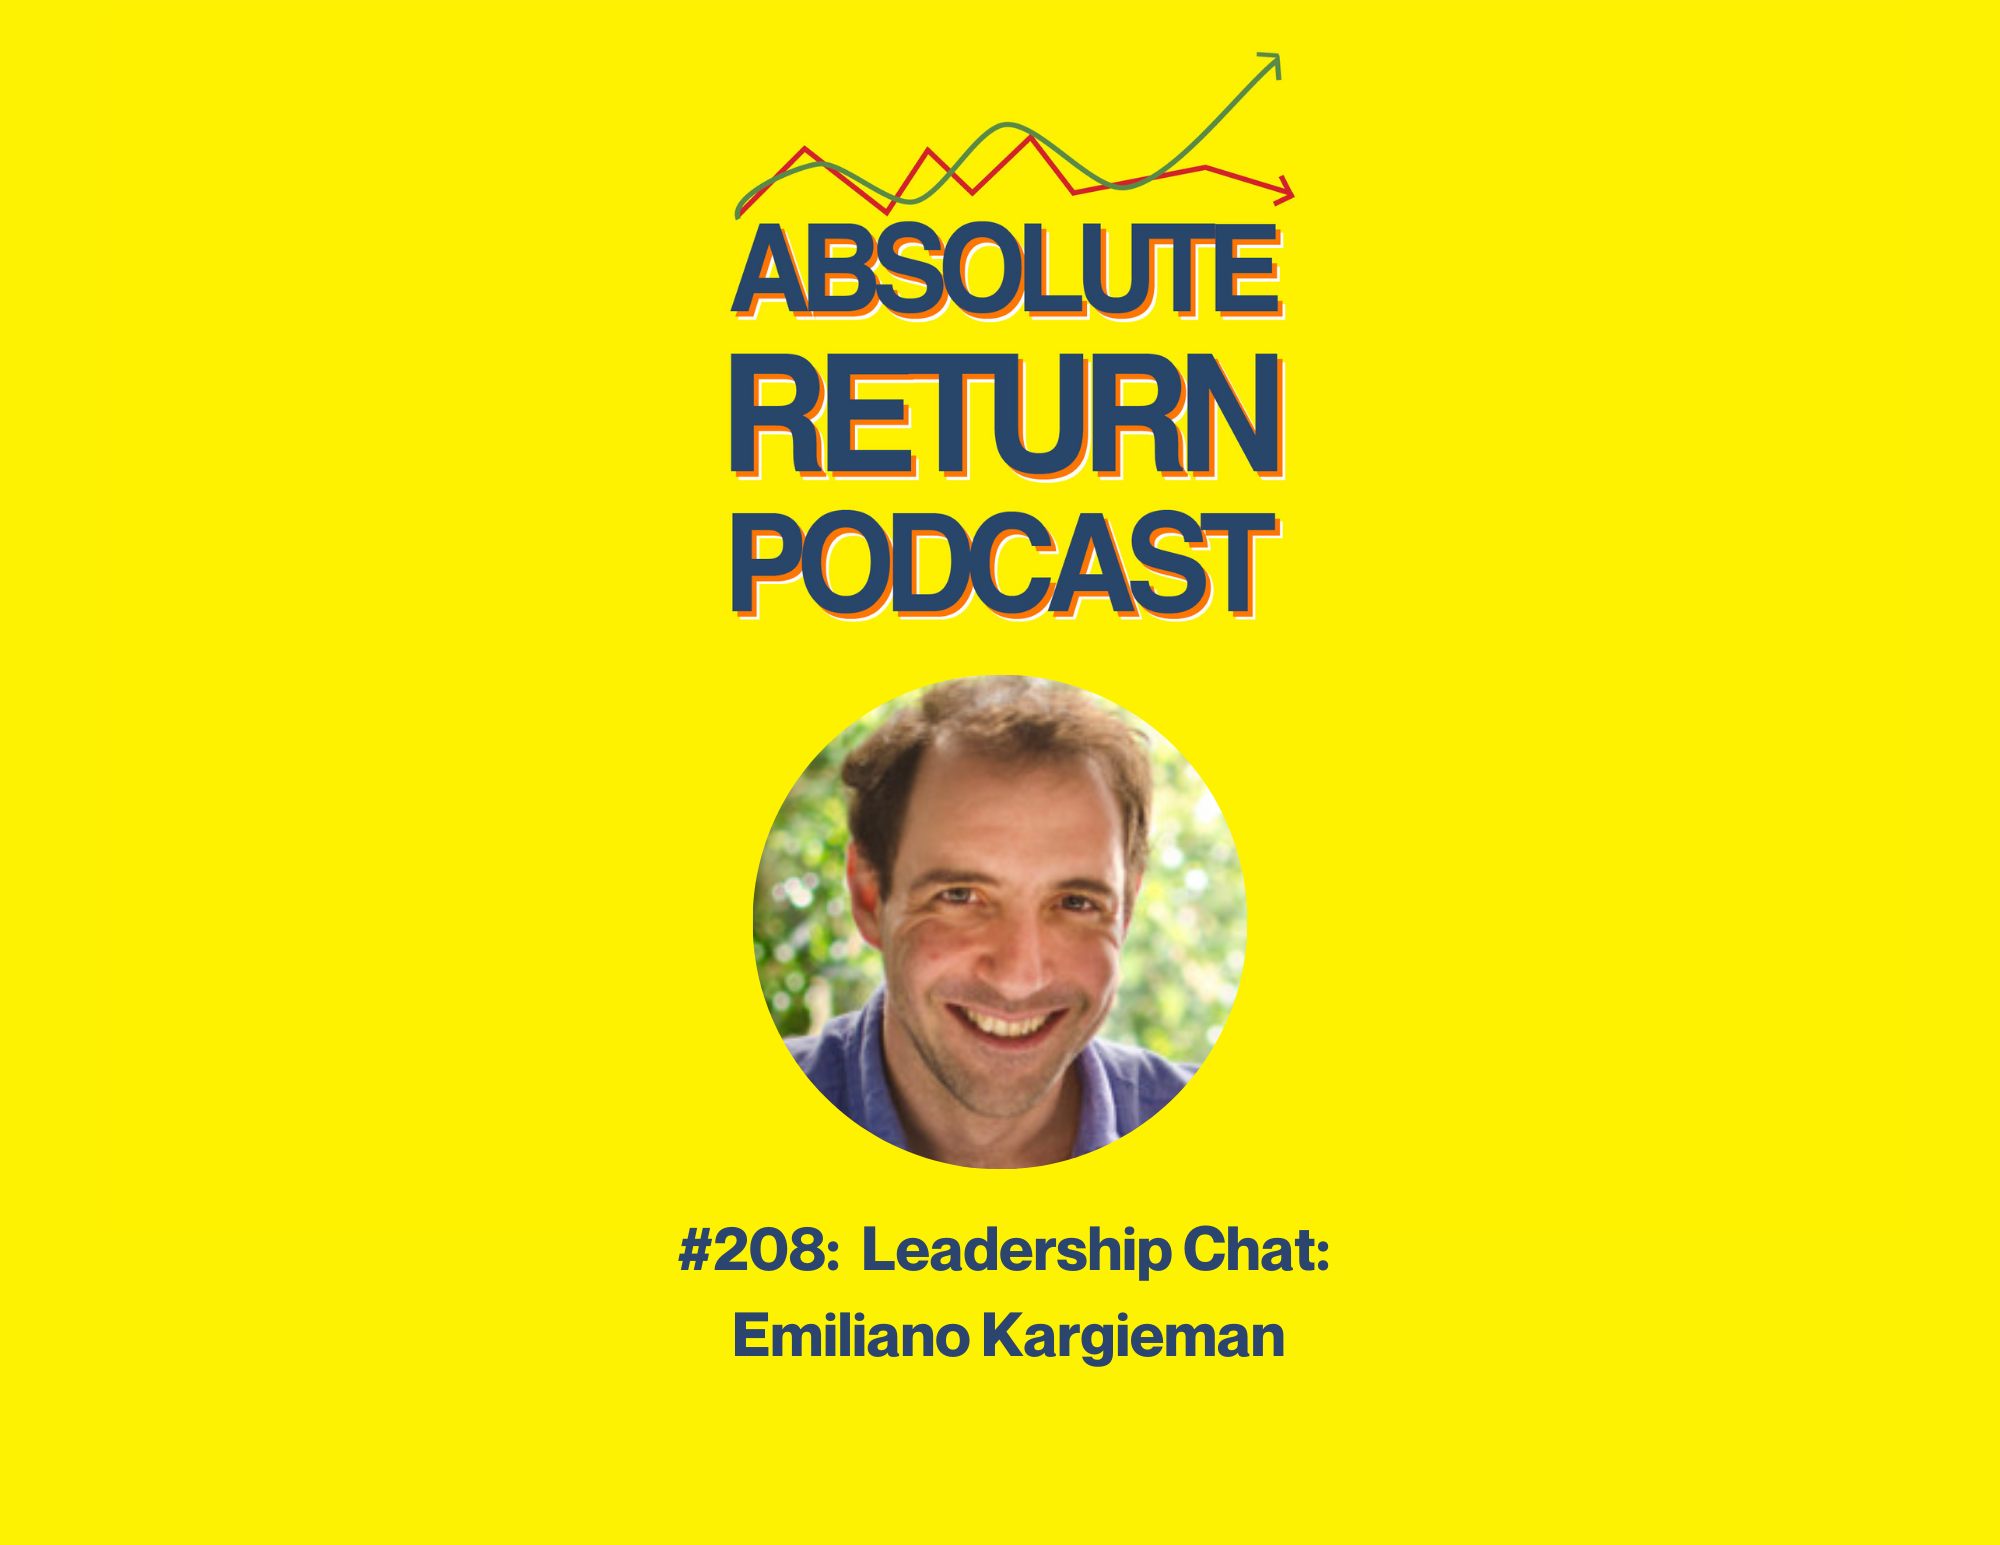 Absolute Return Podcast #208: Leadership Chat: Satellogic CEO Emiliano Kargieman